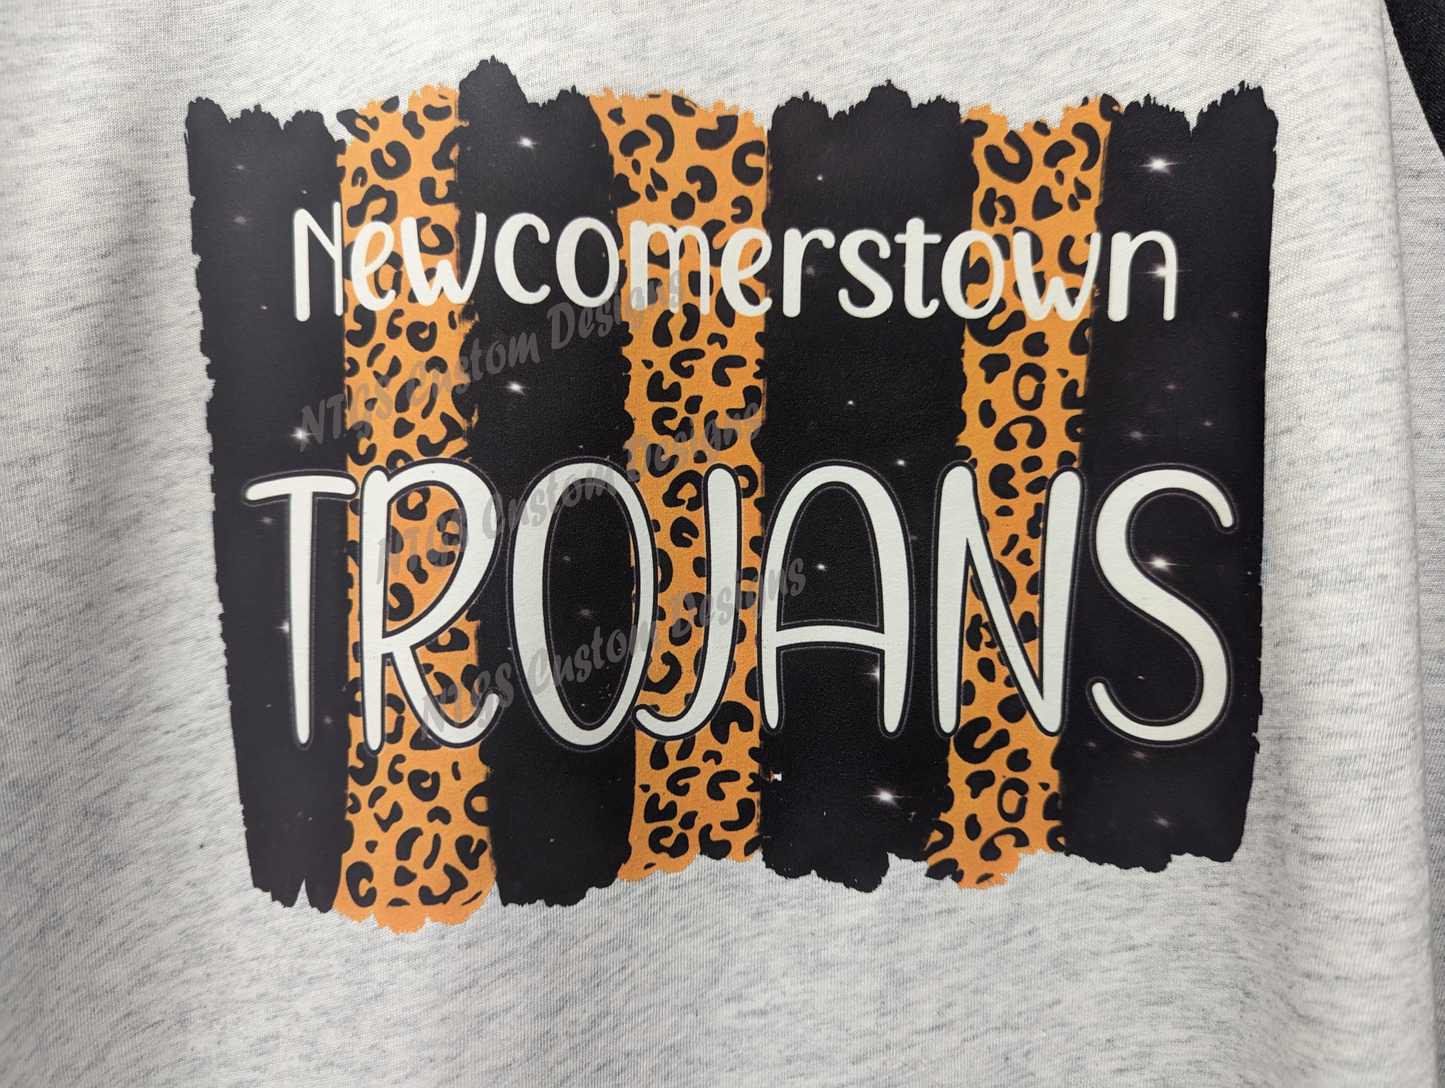 Newcomerstown Trojans orange and black cheetah 3/4 sleeves